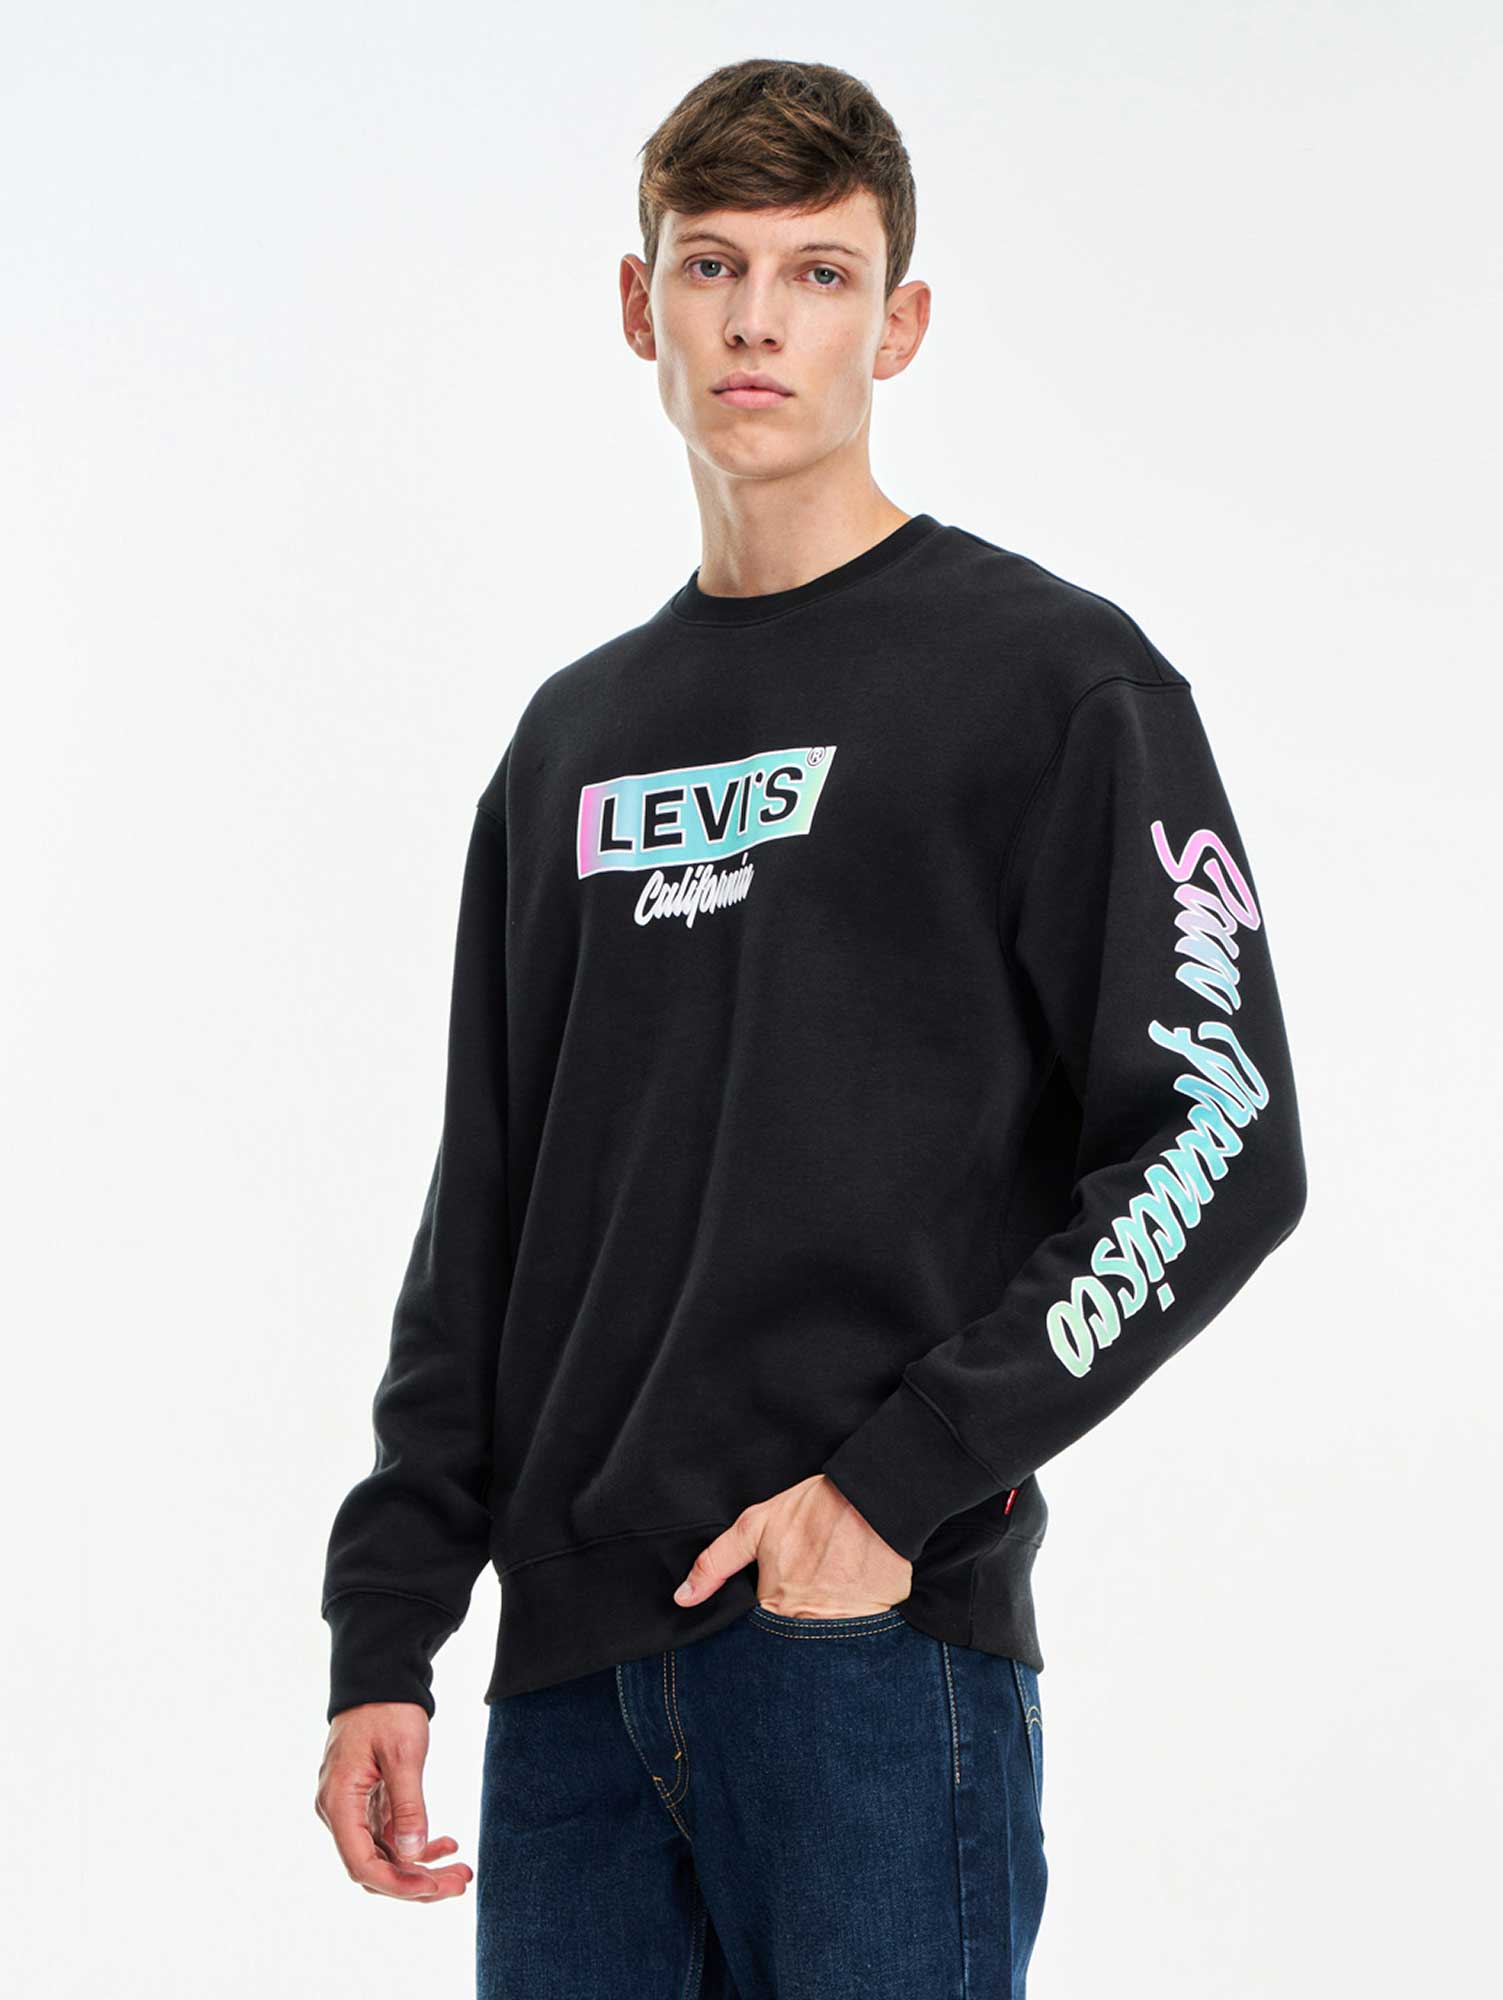 Levi’s-Models-03